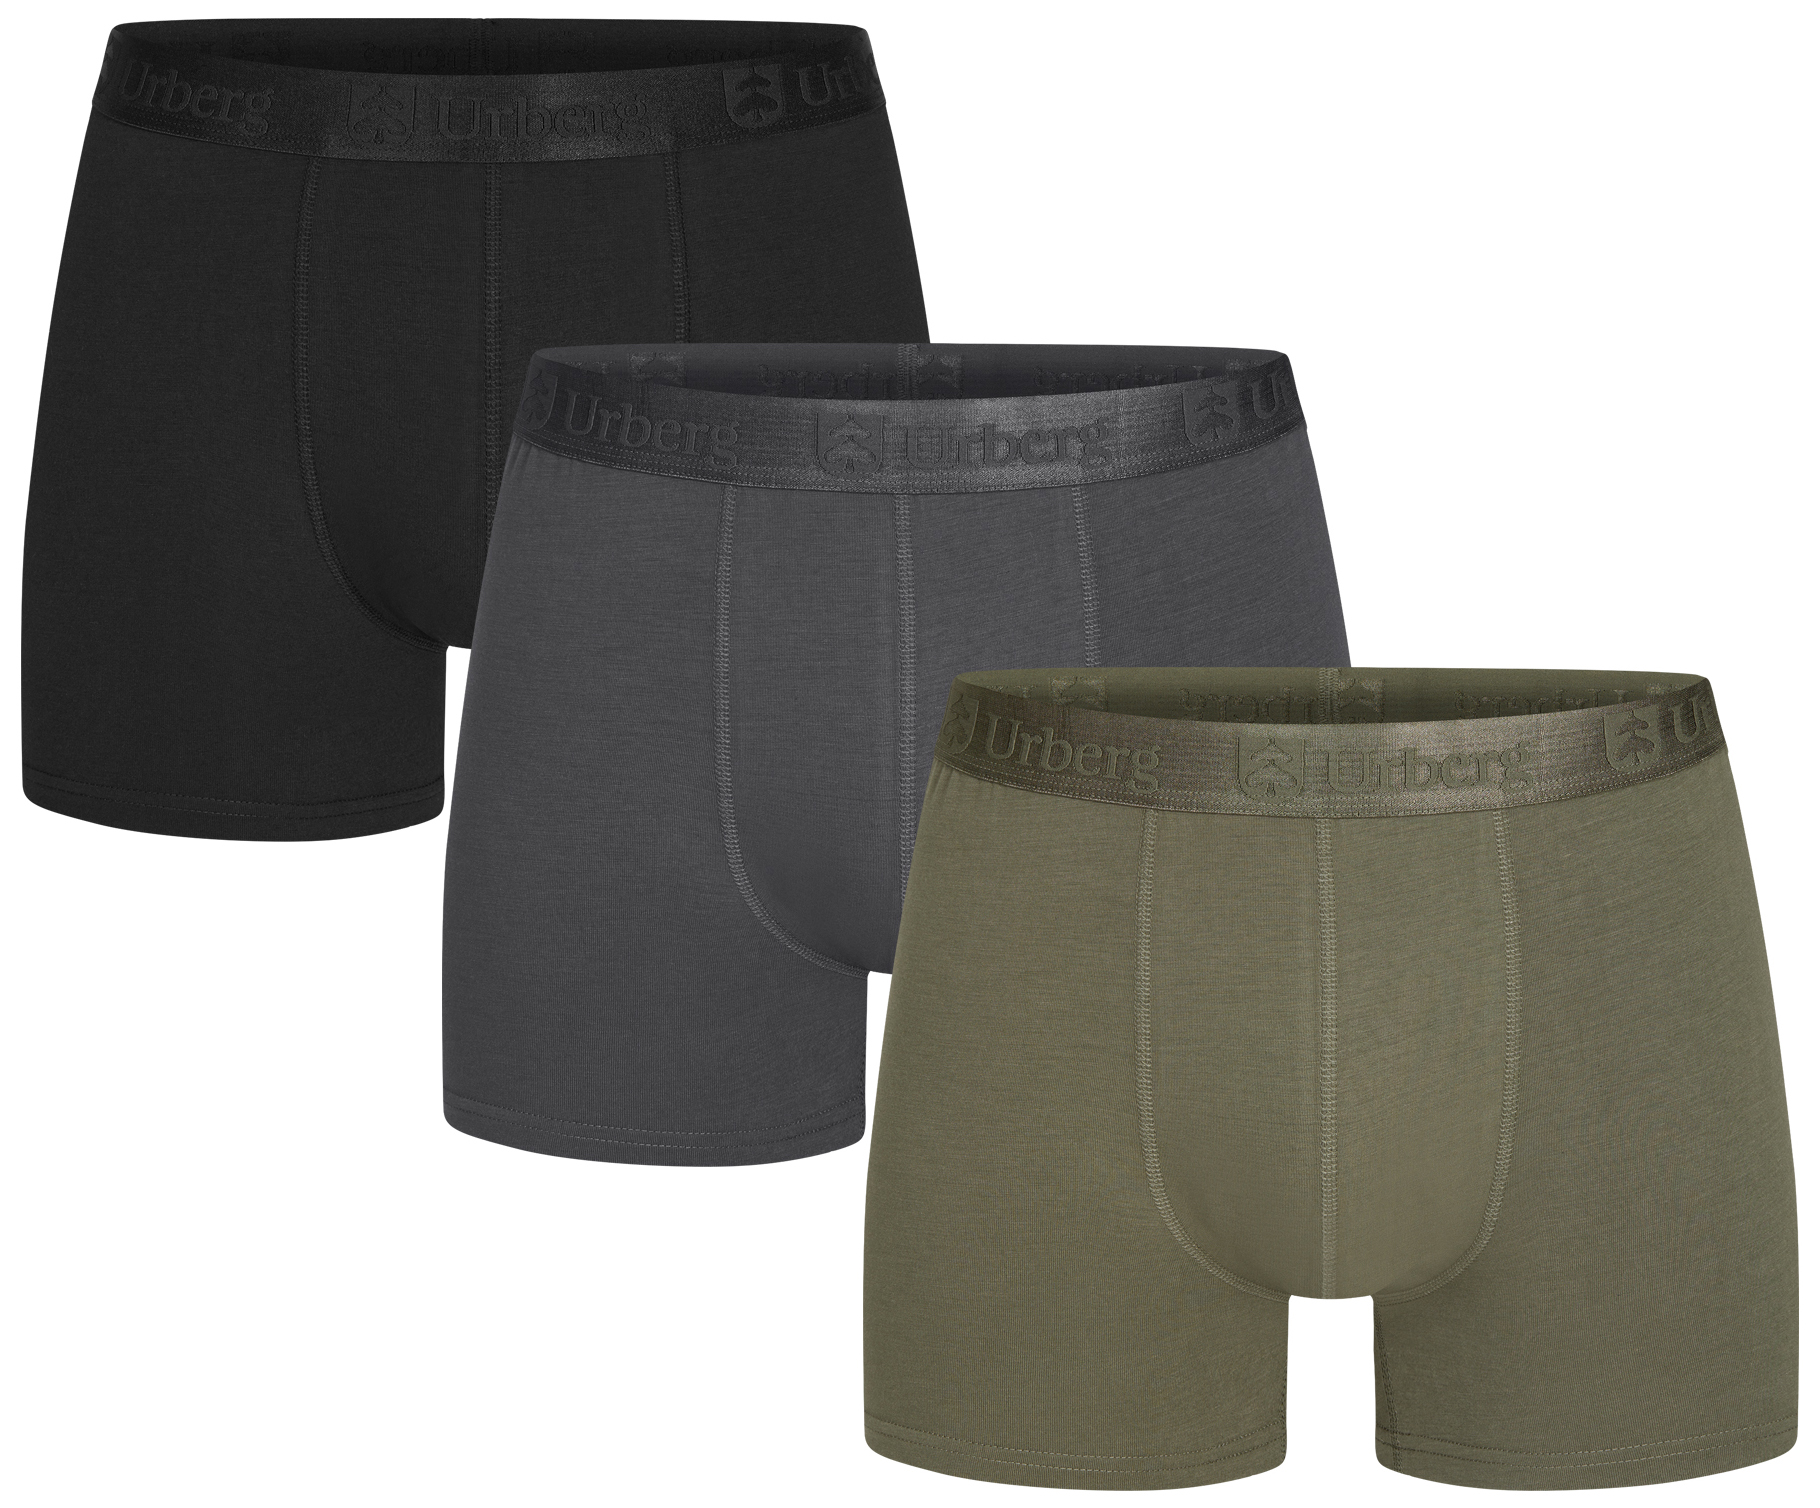 Men’s Isane 3-pack Bamboo Boxers Grey/Black/Green